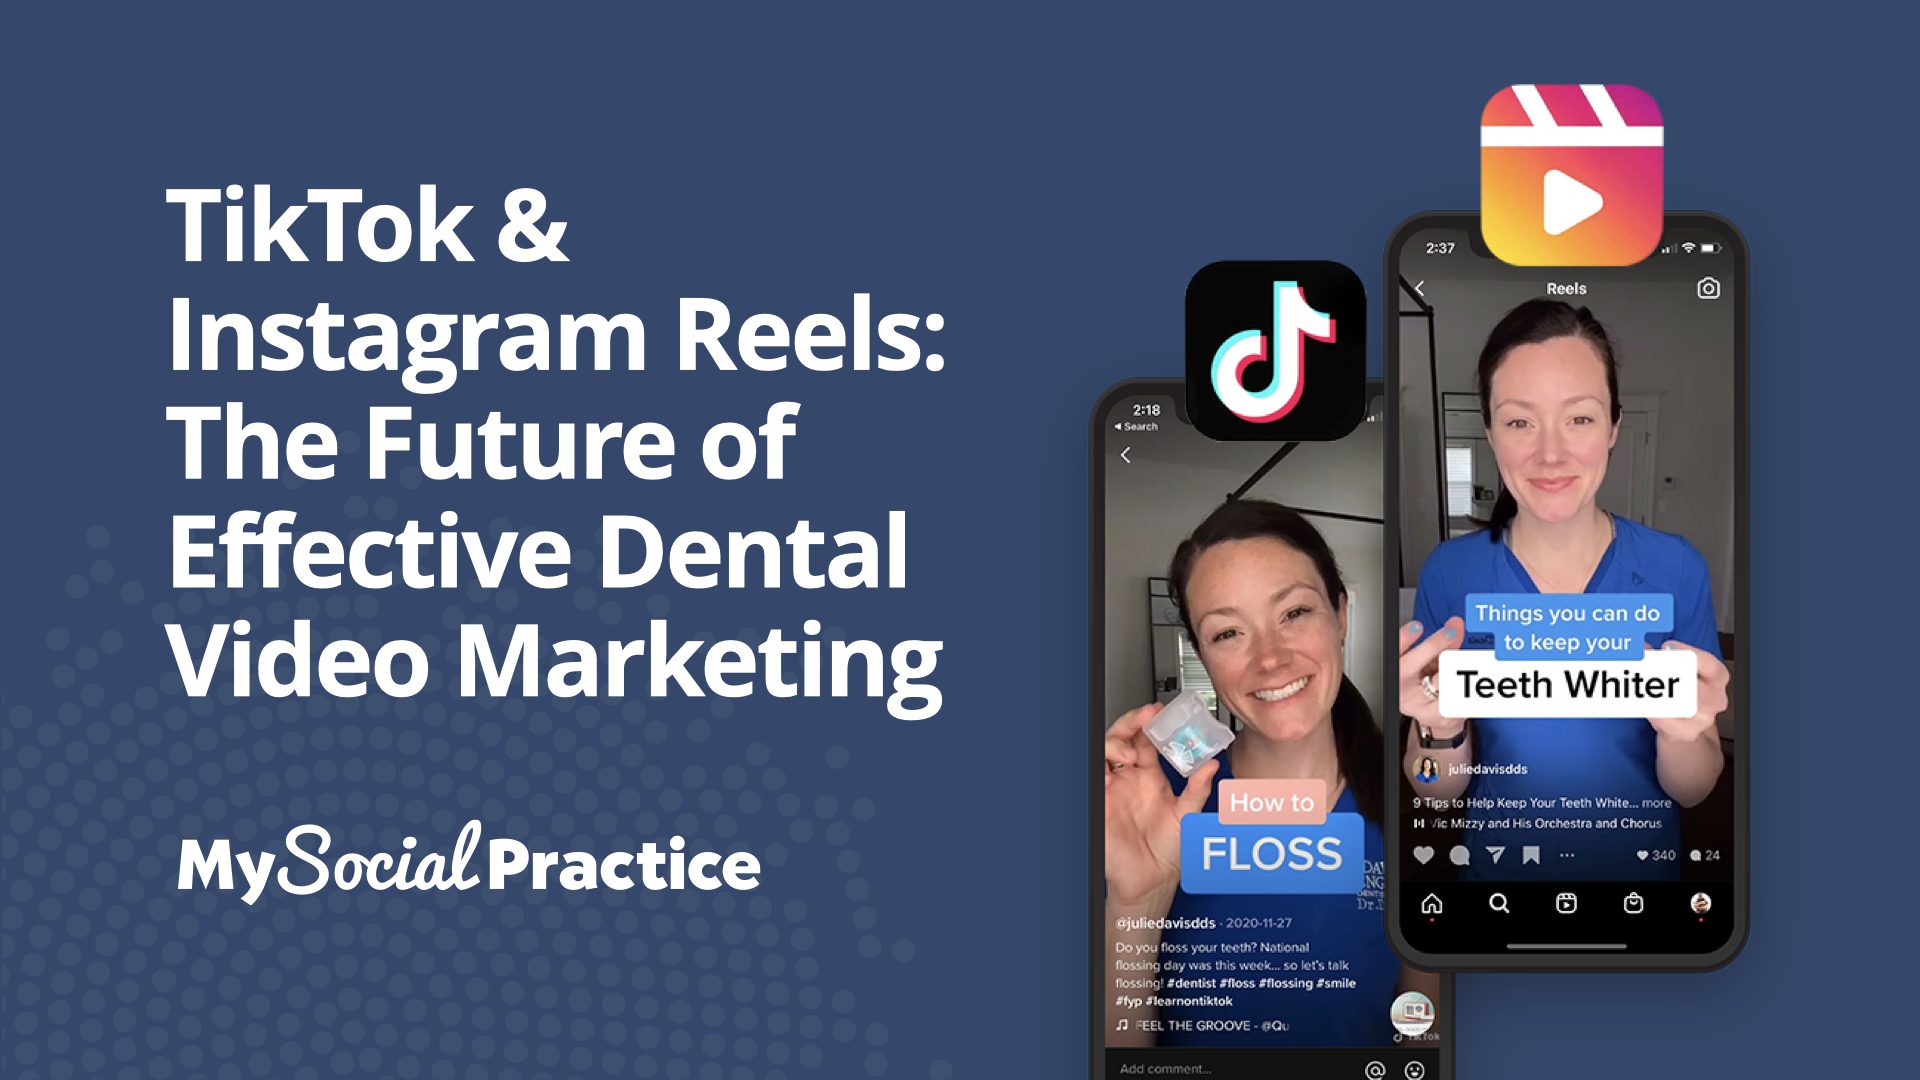 My Social Practice - Social Media Marketing for Dental & Dental Specialty Practices - dental video marketing ideas